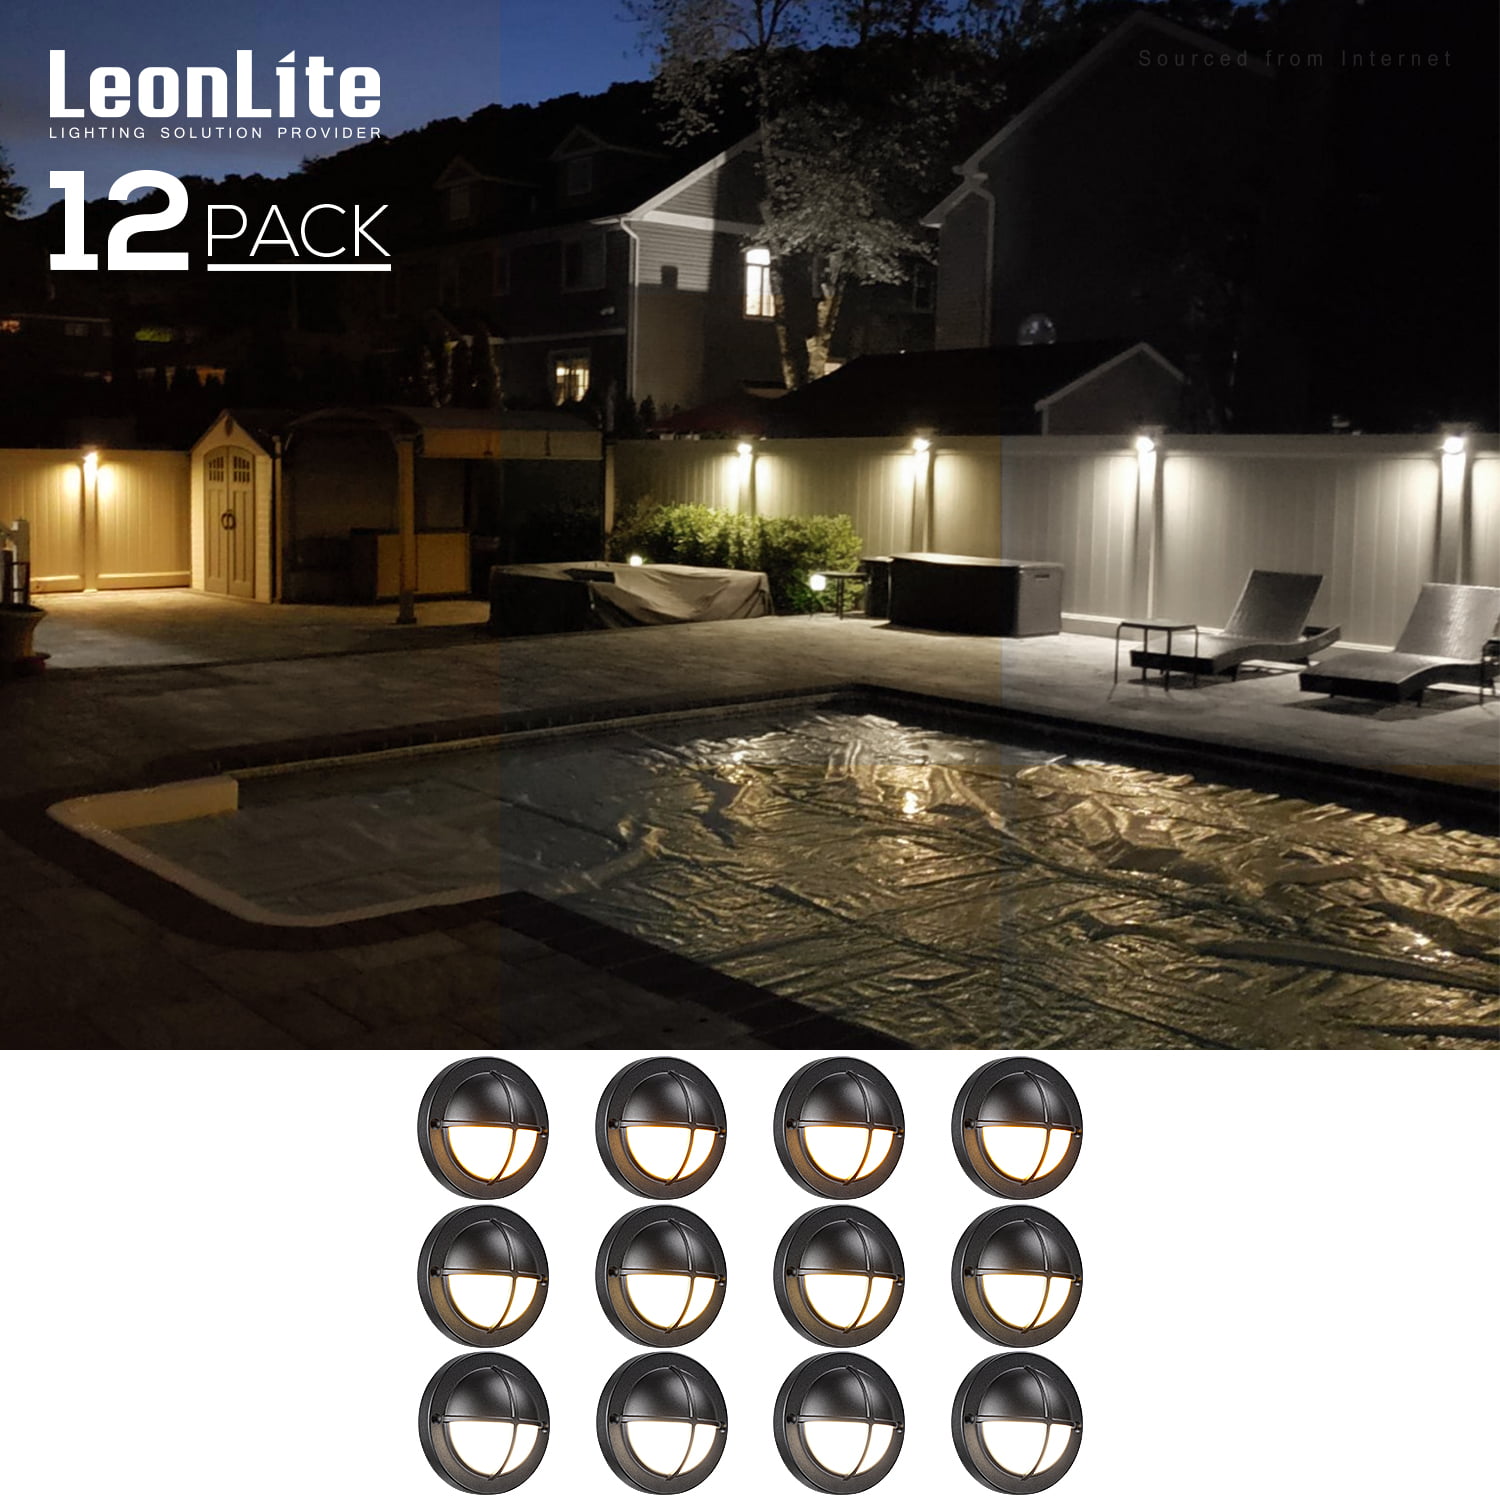 Waterproof IP65 Low Voltage LED Step Lights for Outdoor Lighting